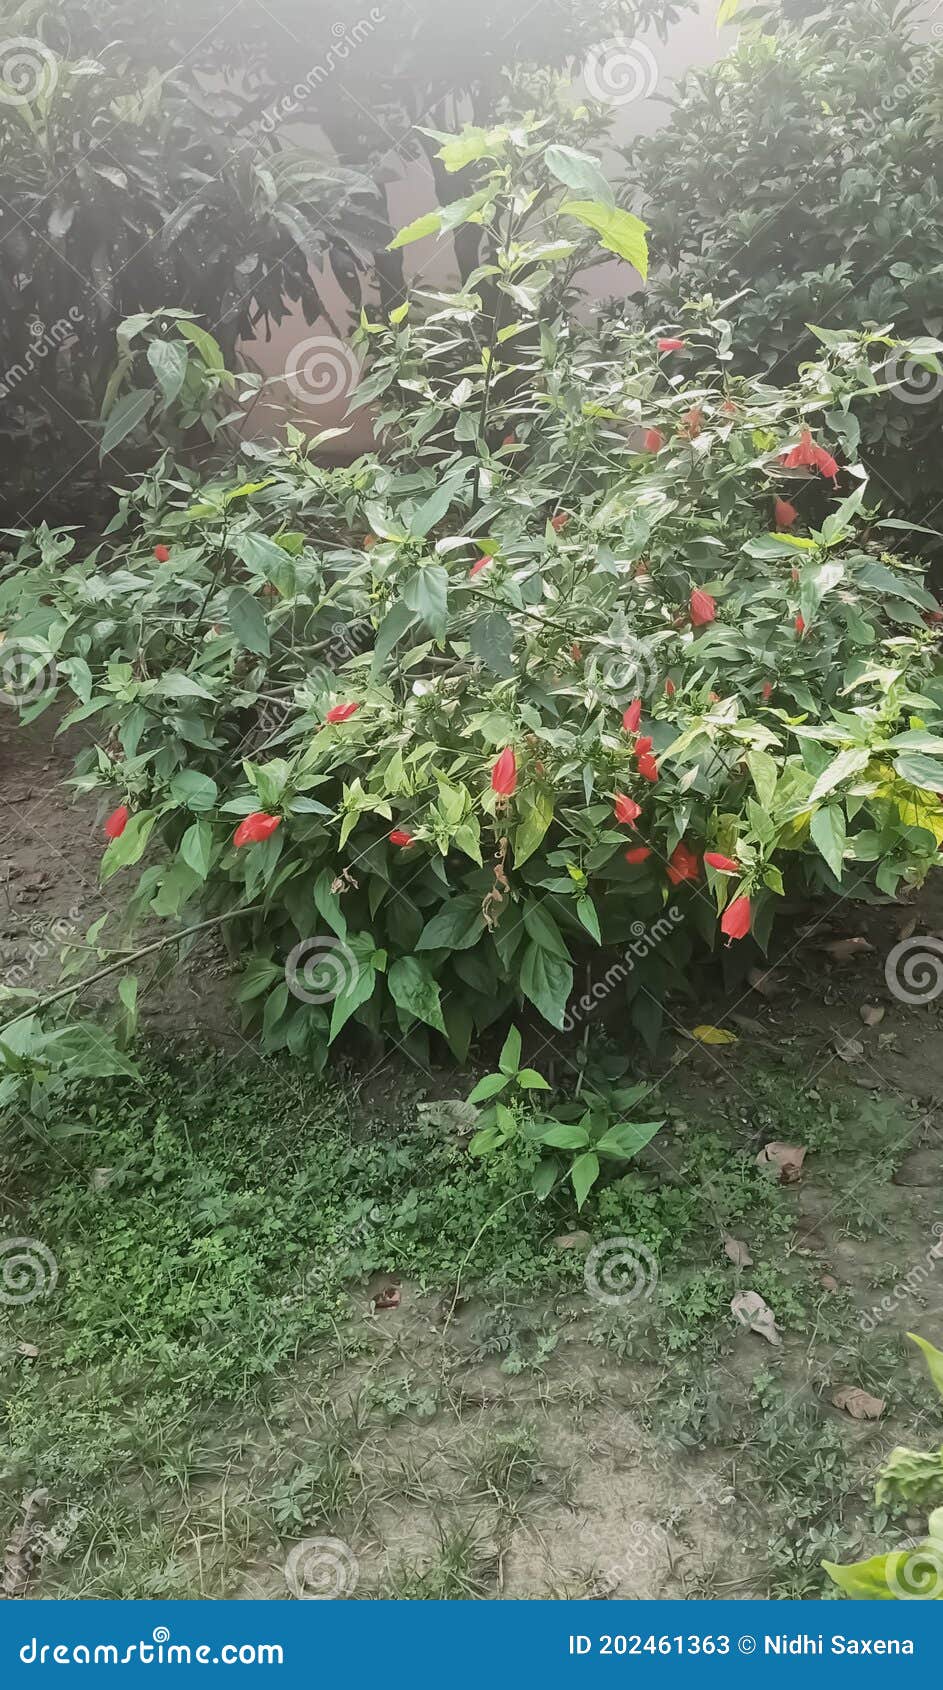 beautiful flowers growing on the planta